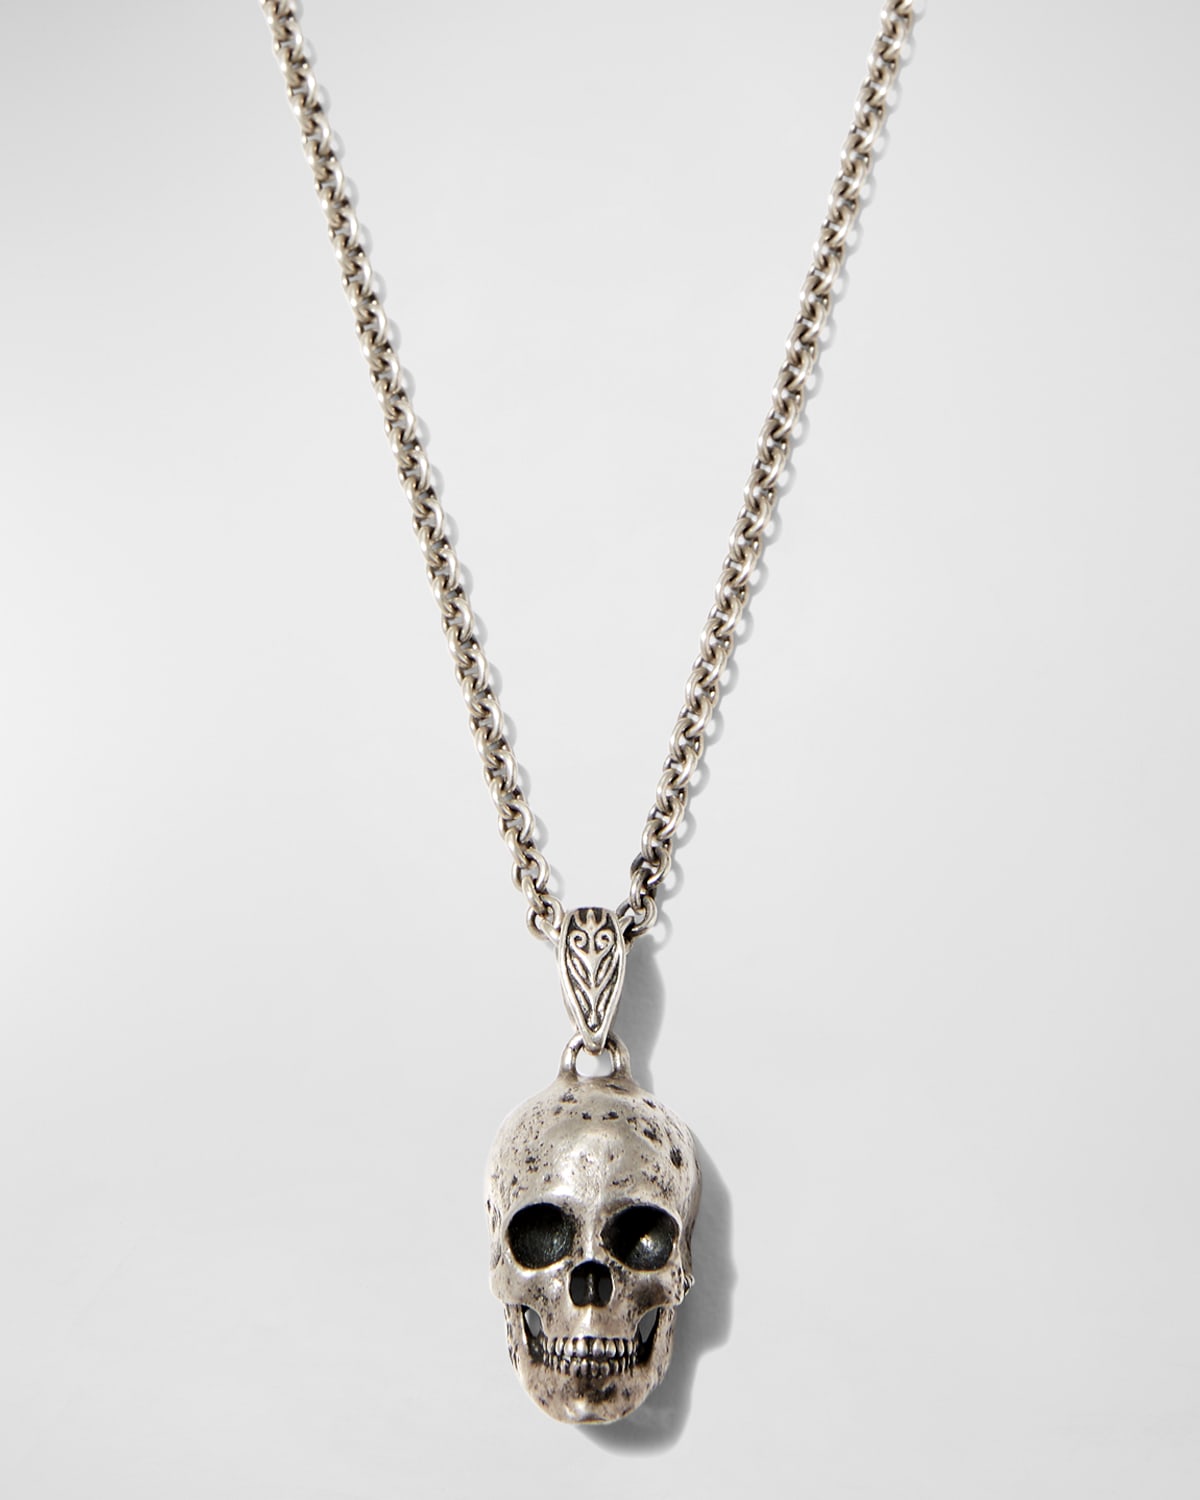 Men's Skull Pendant Necklace, 24"L